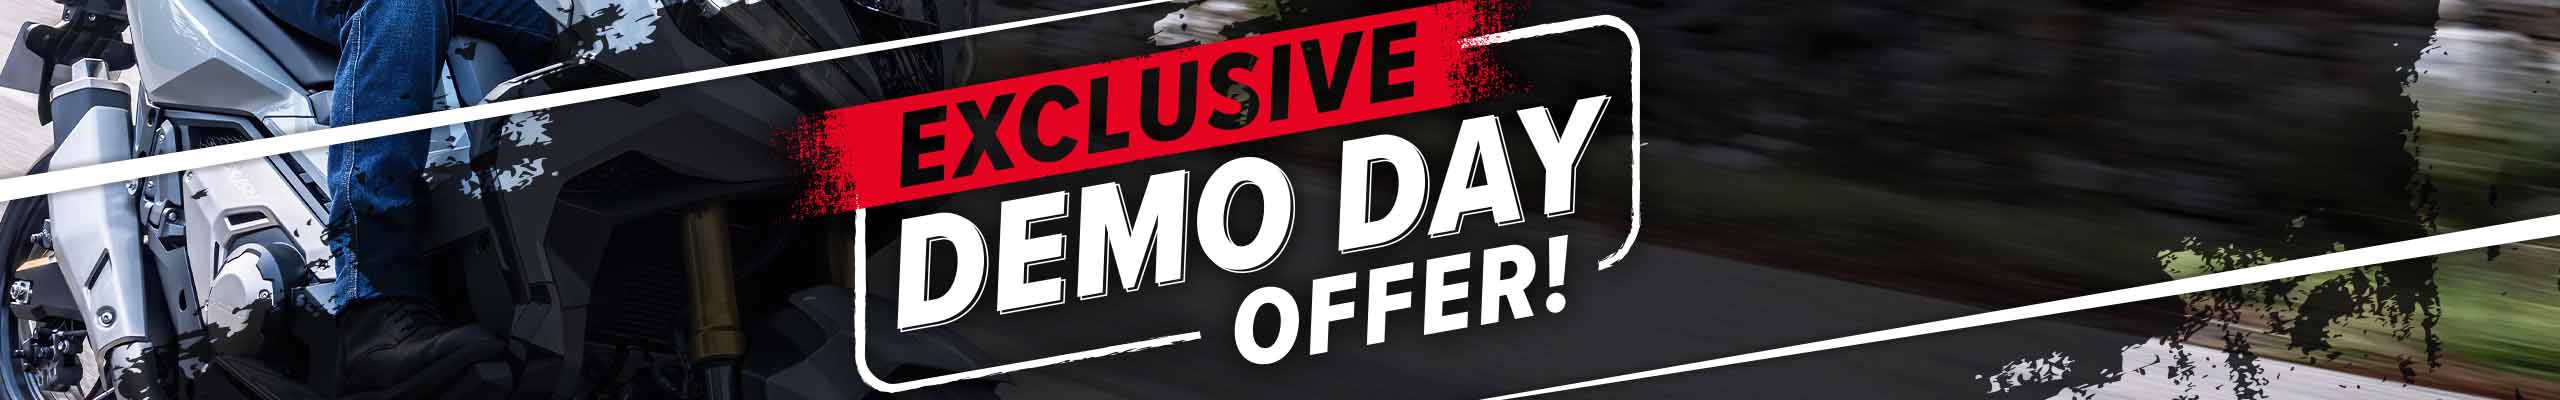 Maidstone Honda Demo Day Offers